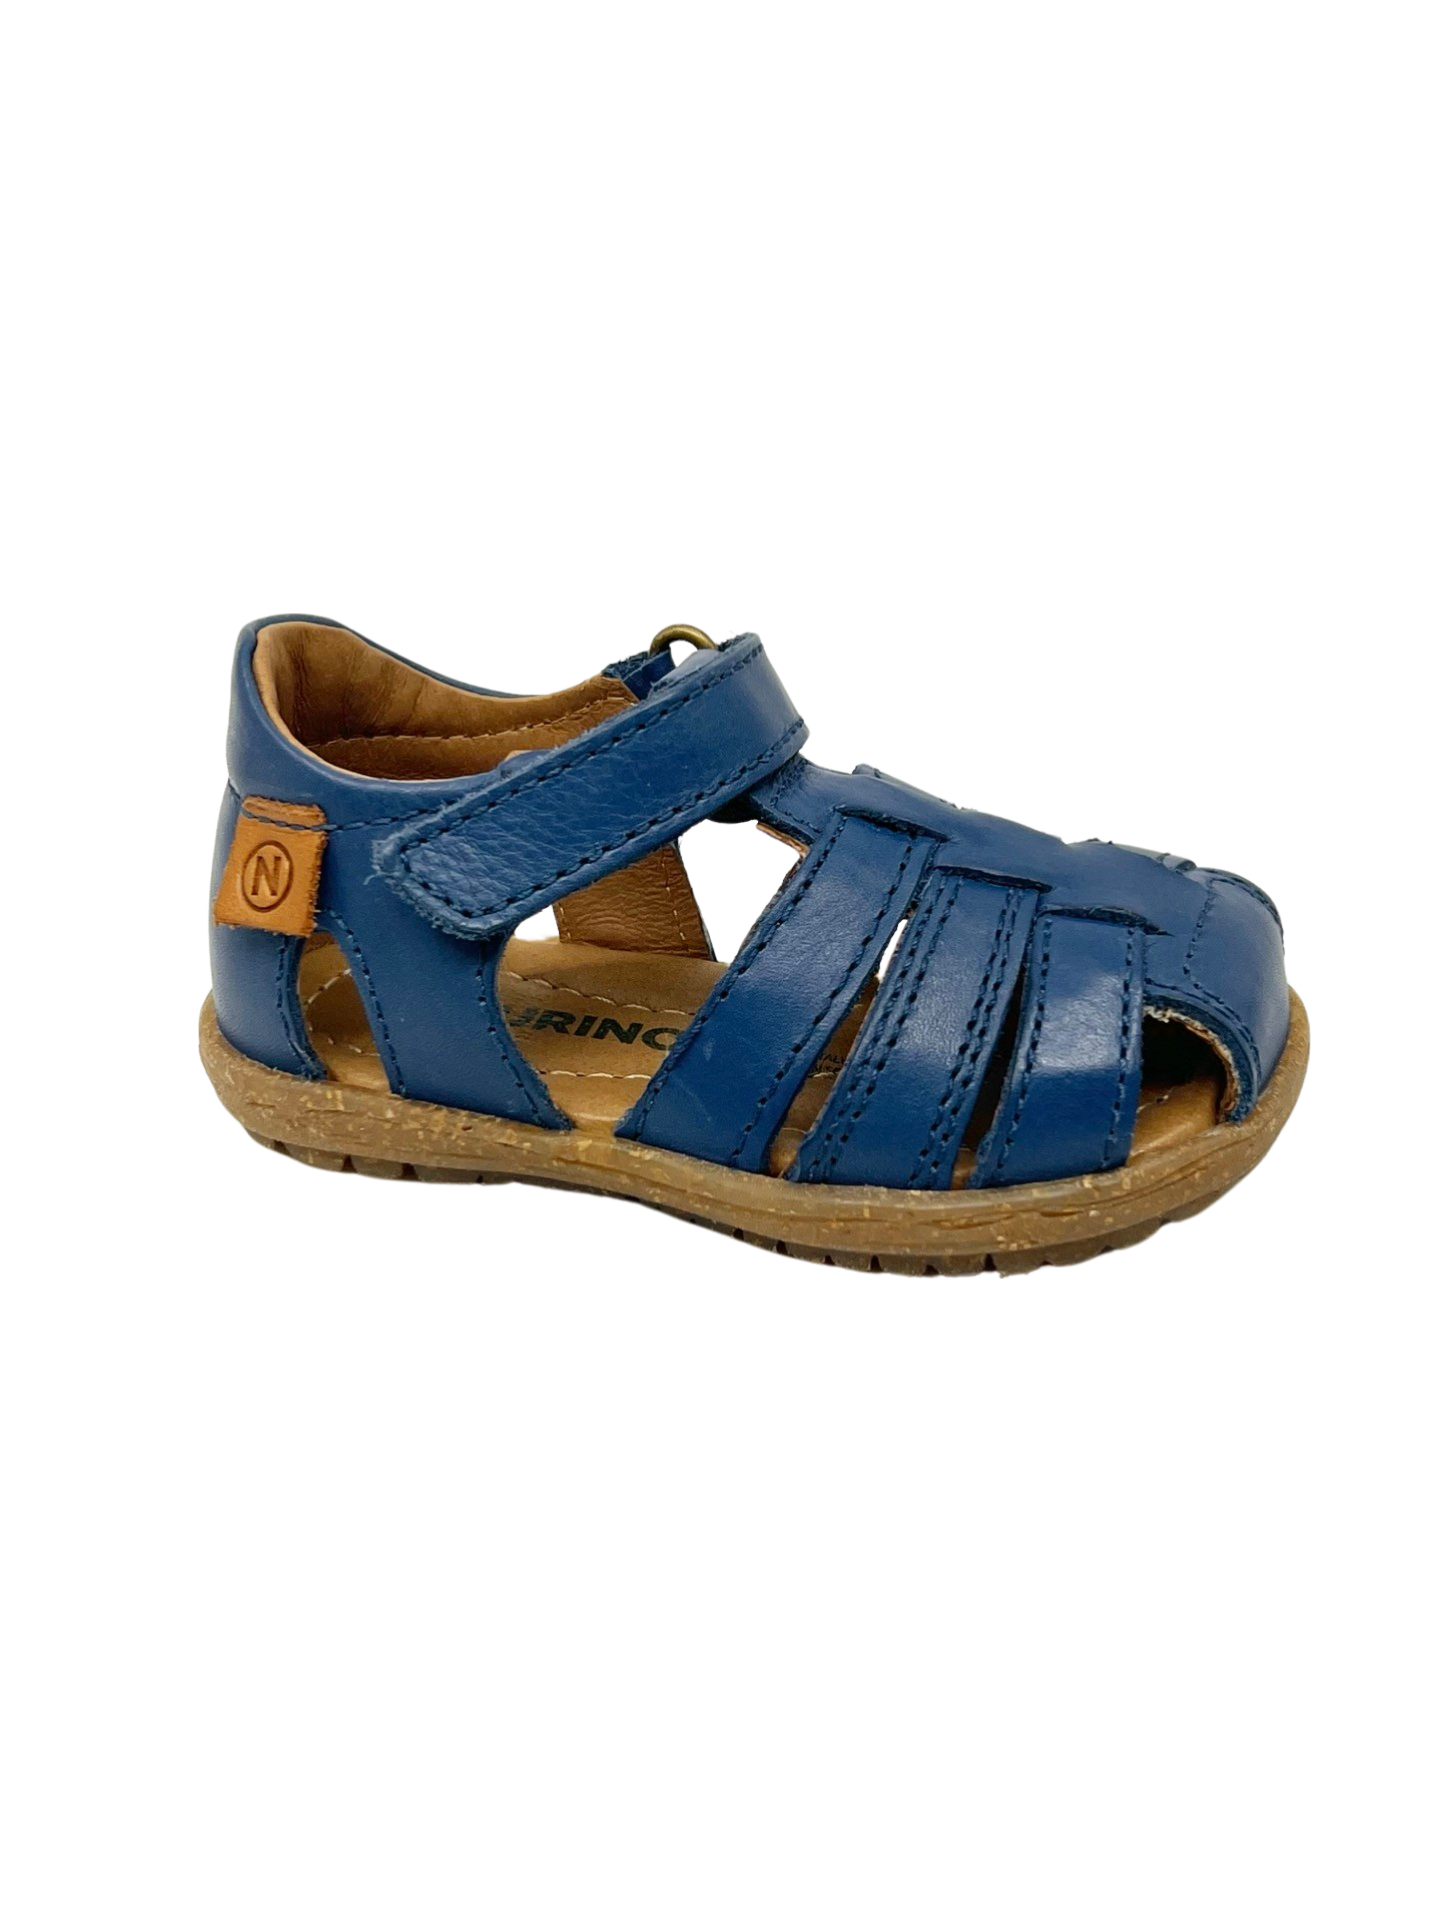 Naturino Blue Sandal - See